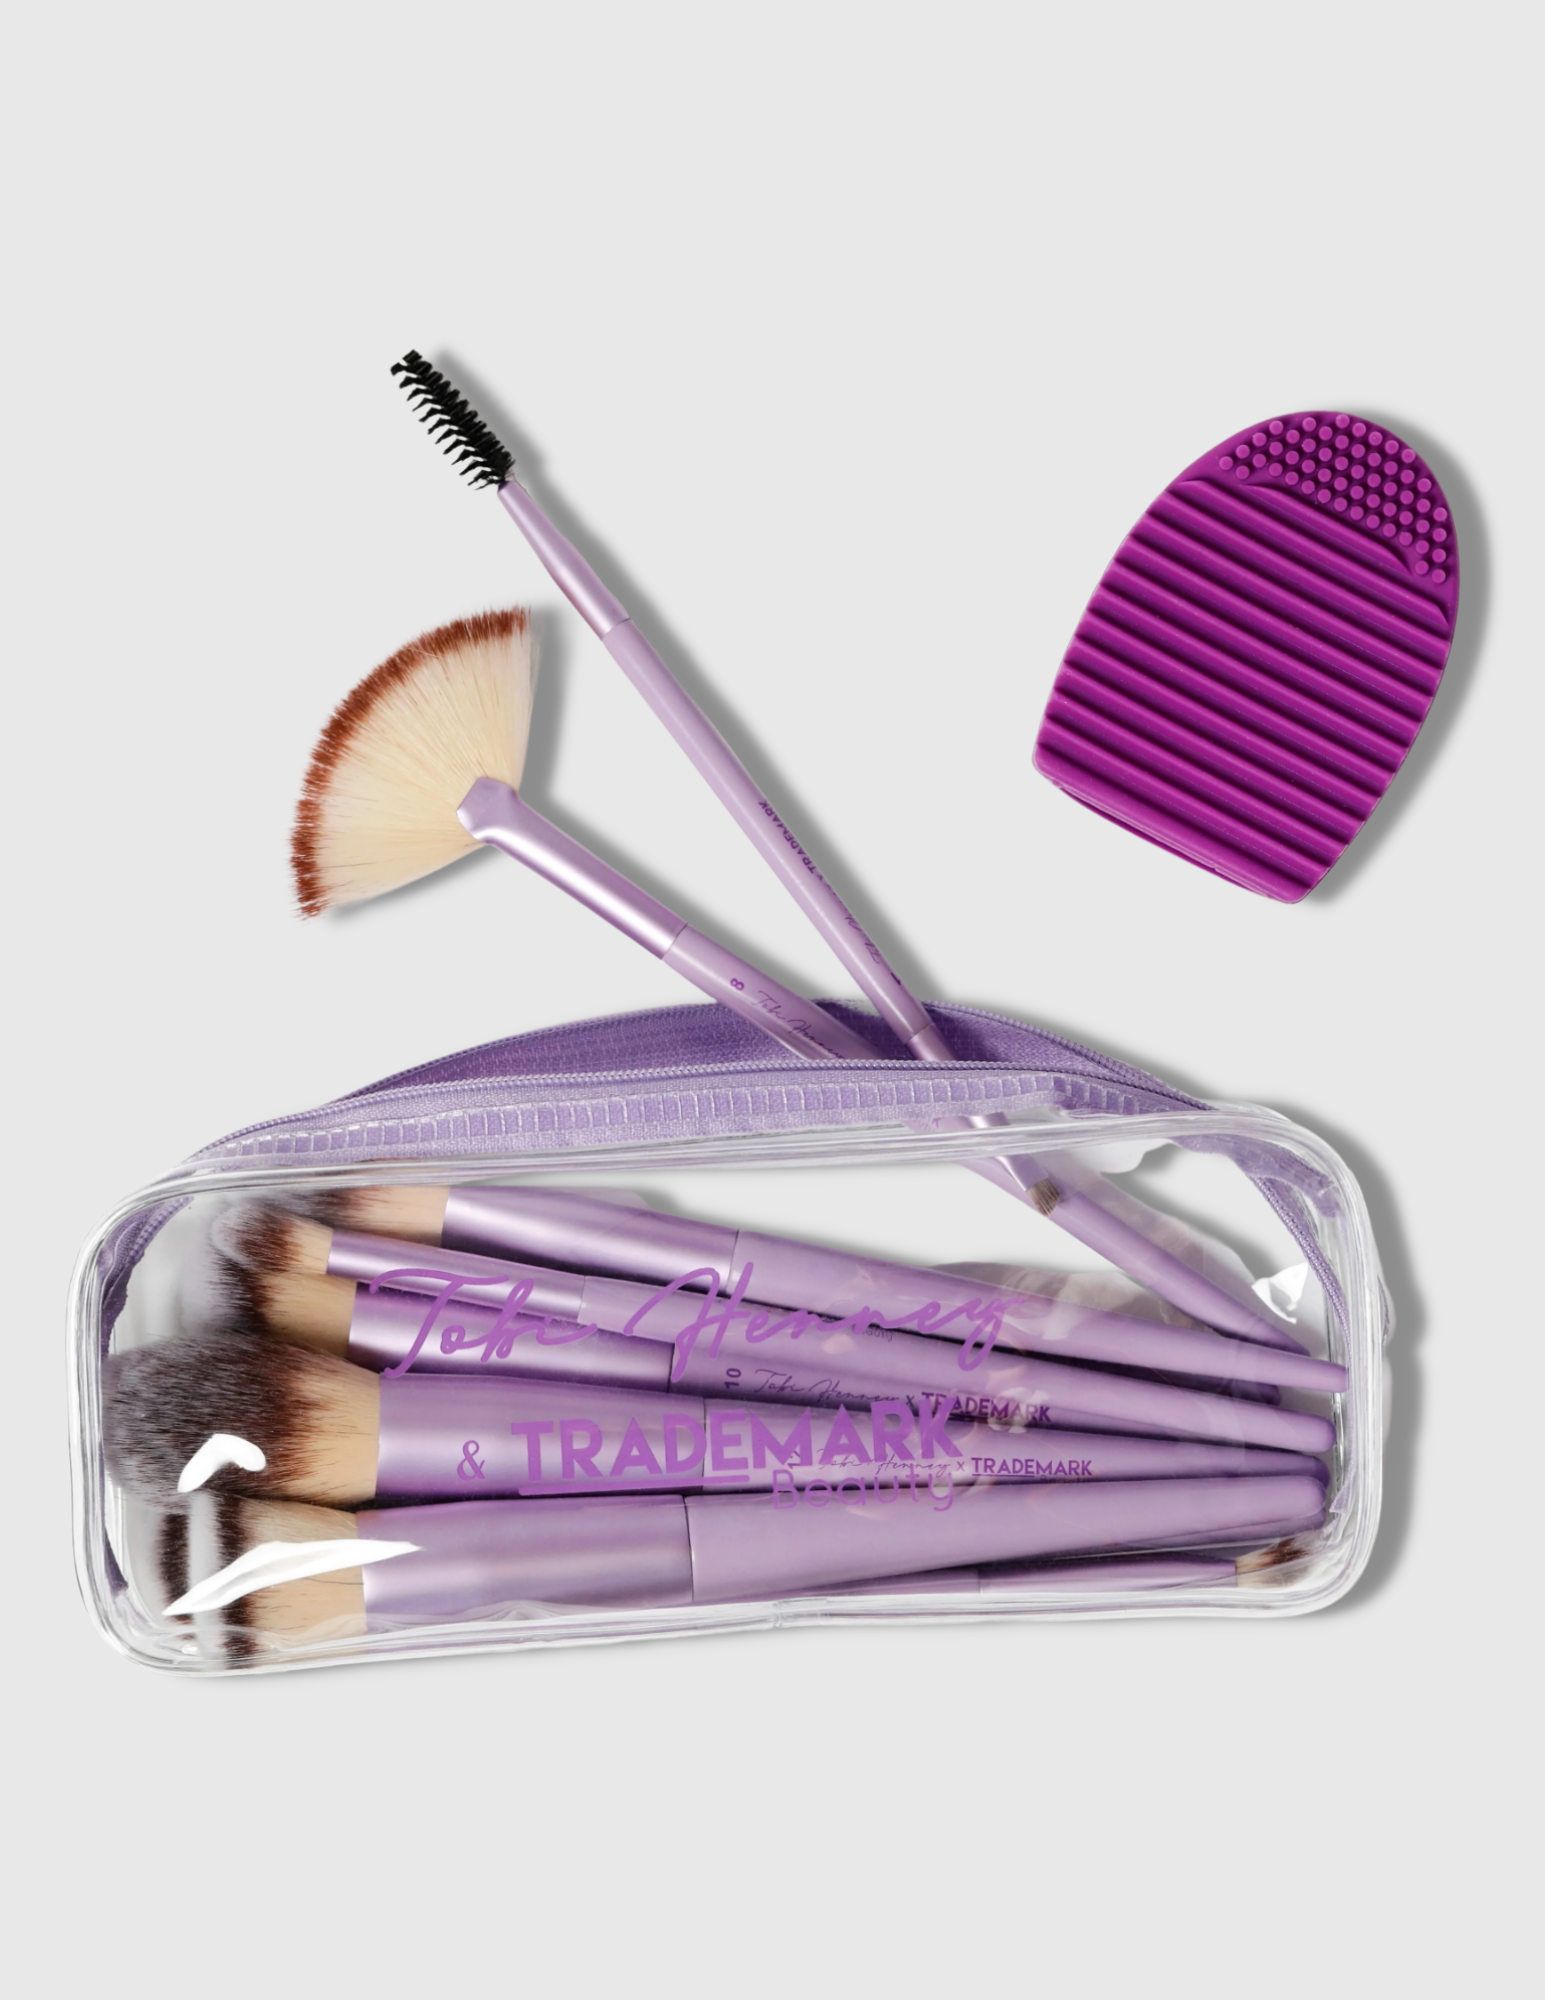 Crease Makeup Brush - #7 - Trademark Beauty